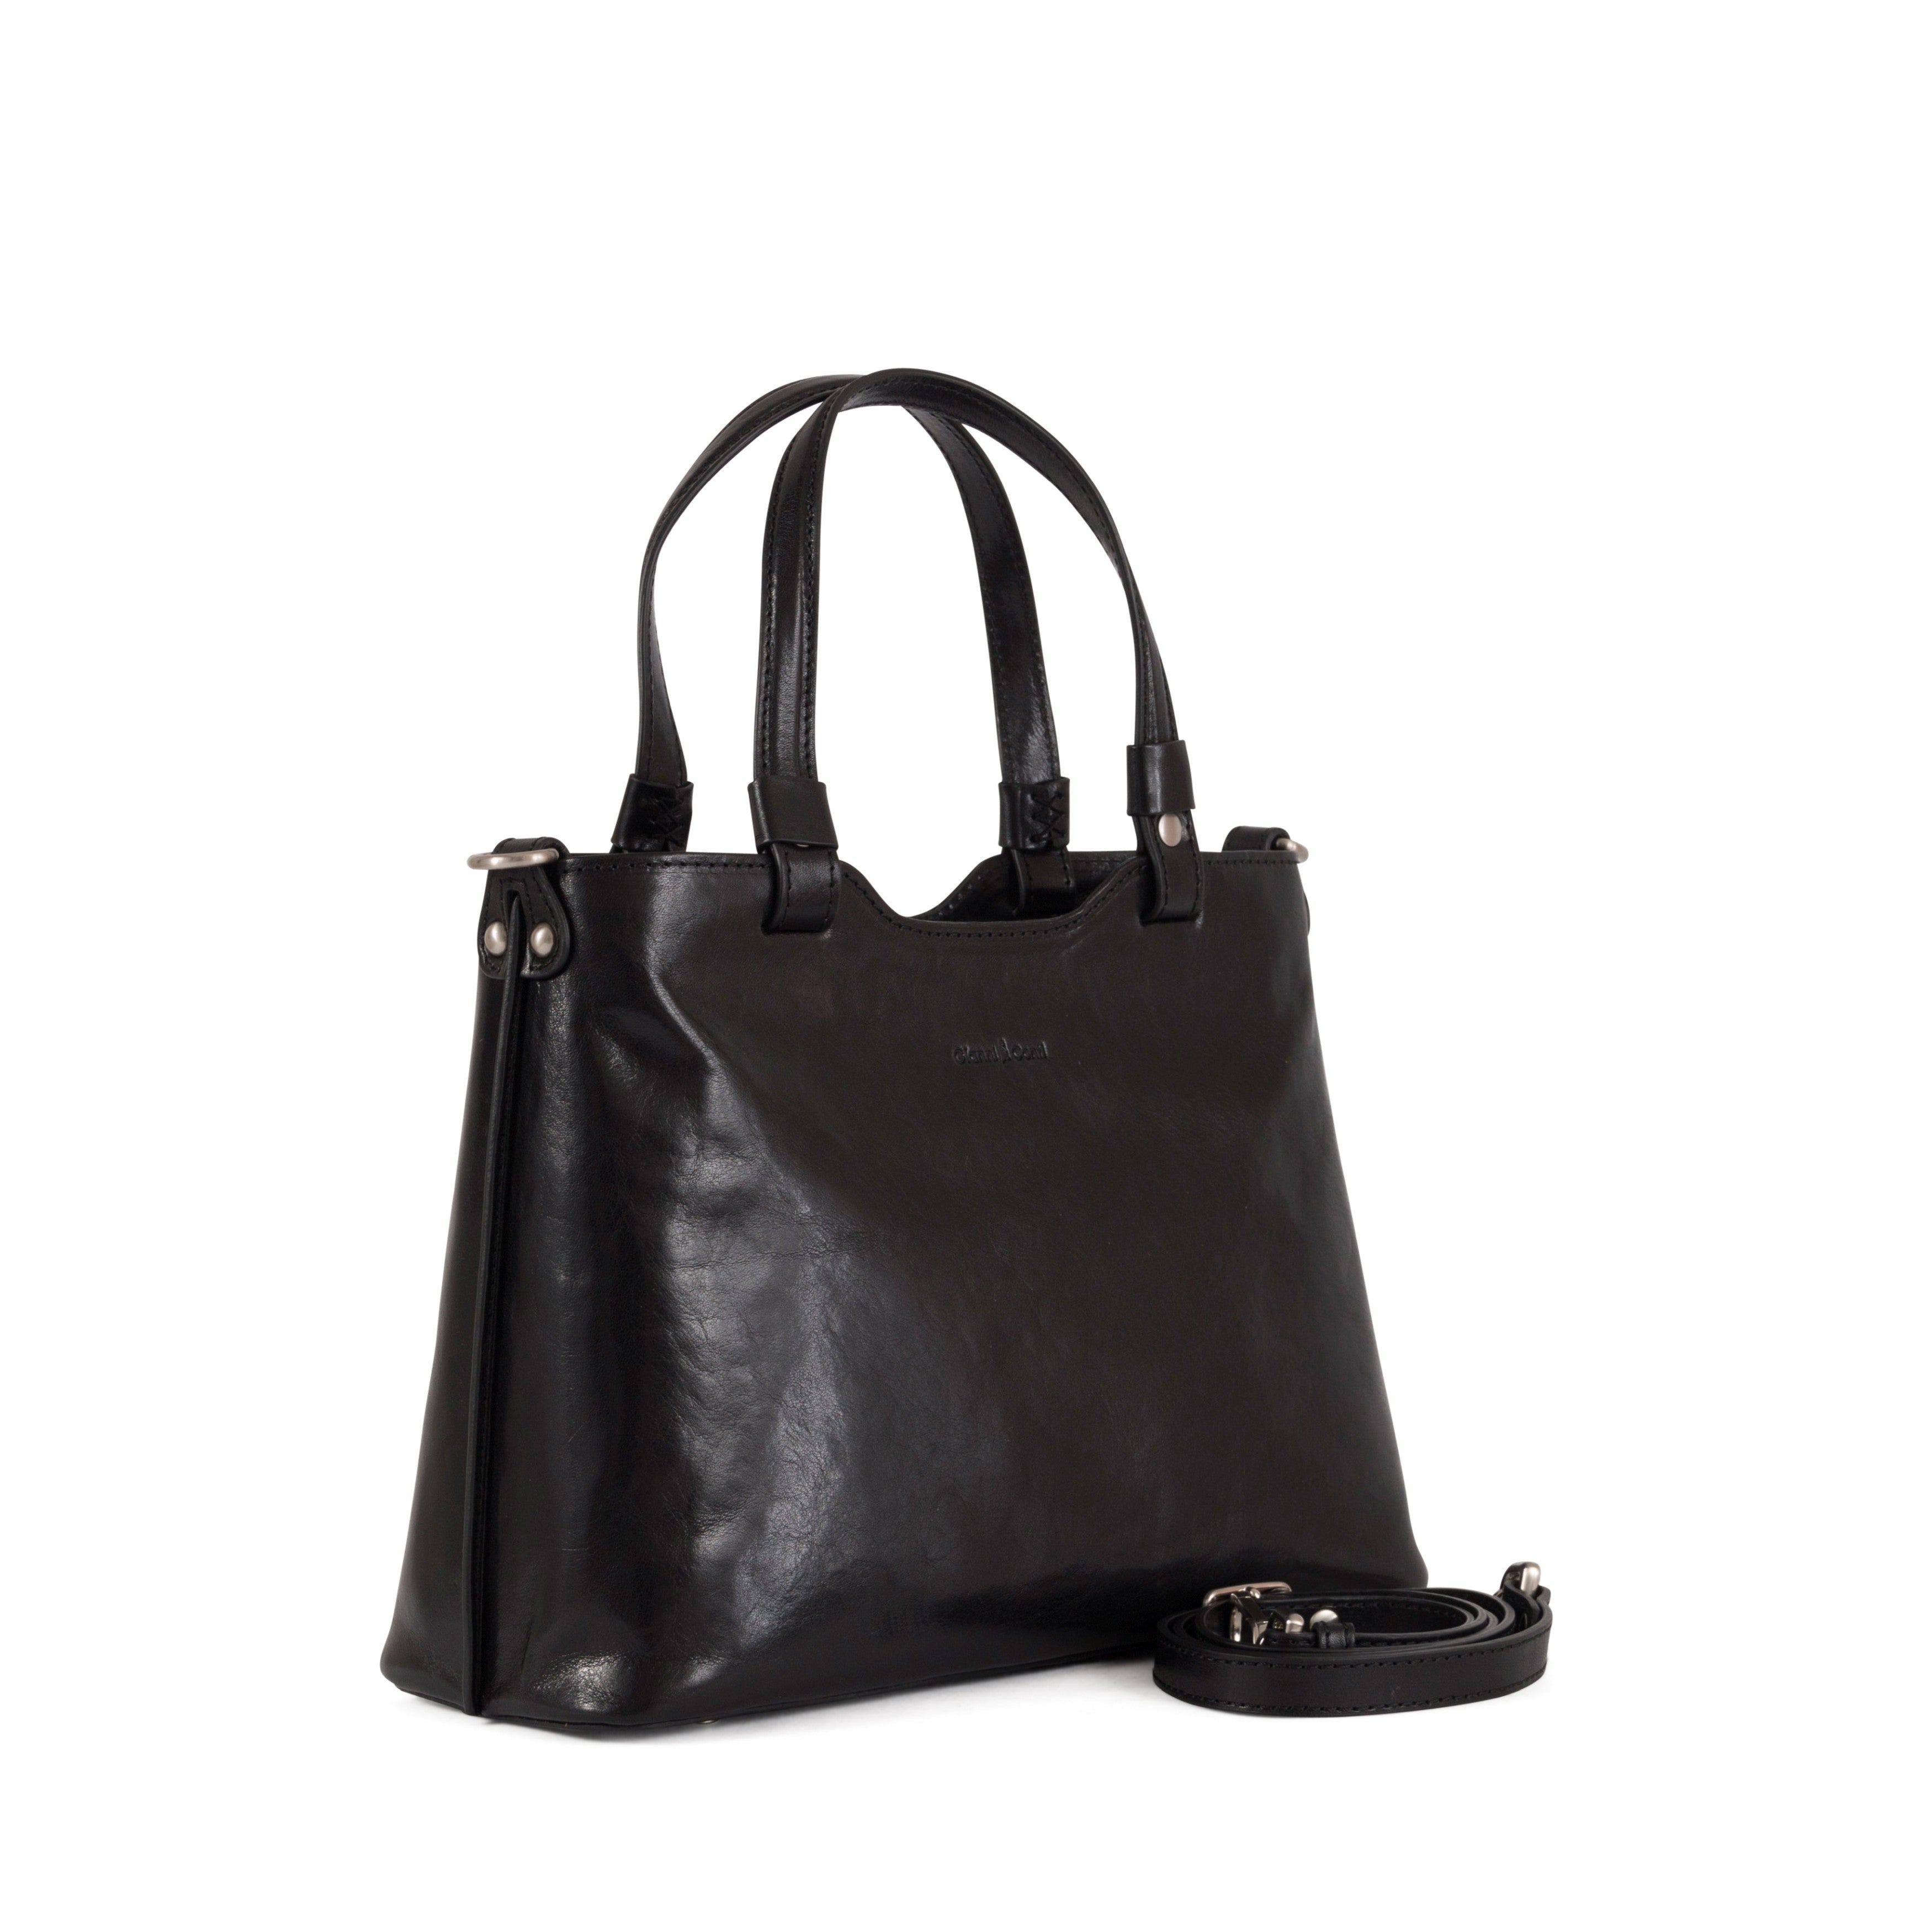 Nicole Top Handle Bag by Gianni Conti